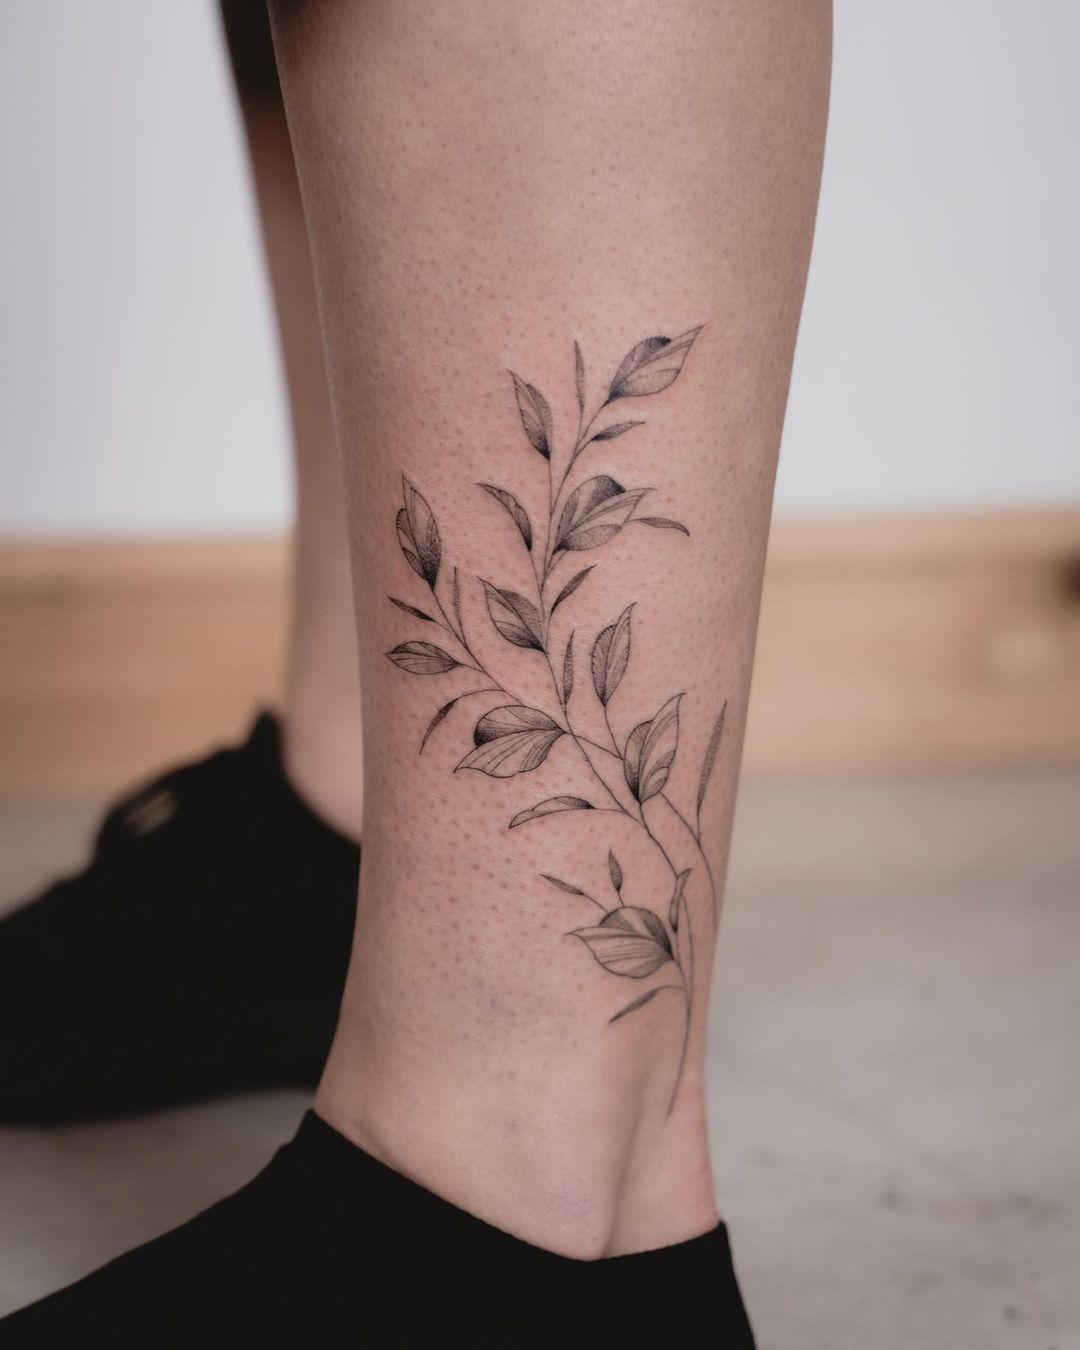 Black inked flower tattoo by stepblack